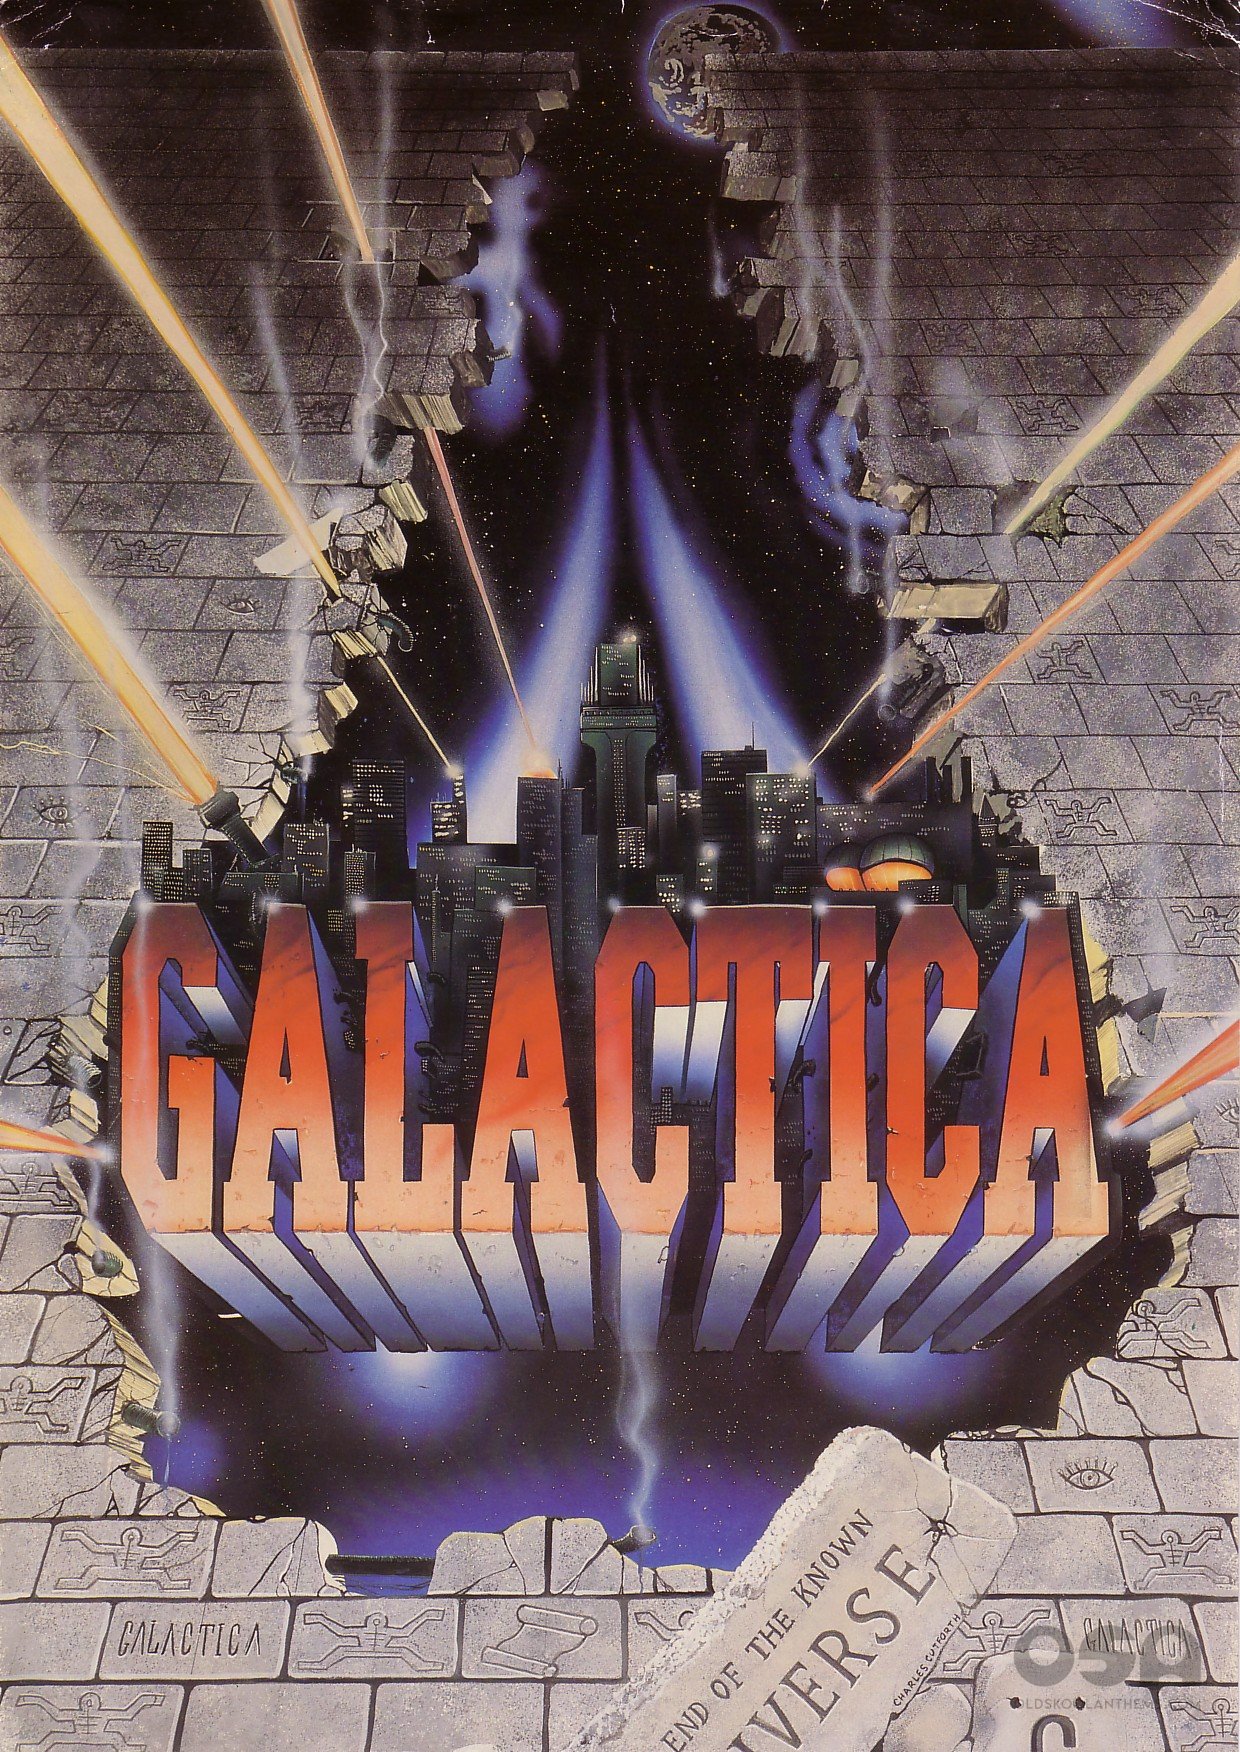 1_Galactica_Fri_Oct_9th_1992_Ripon_Racecourse_Ripon_North_Yorkshire.jpg